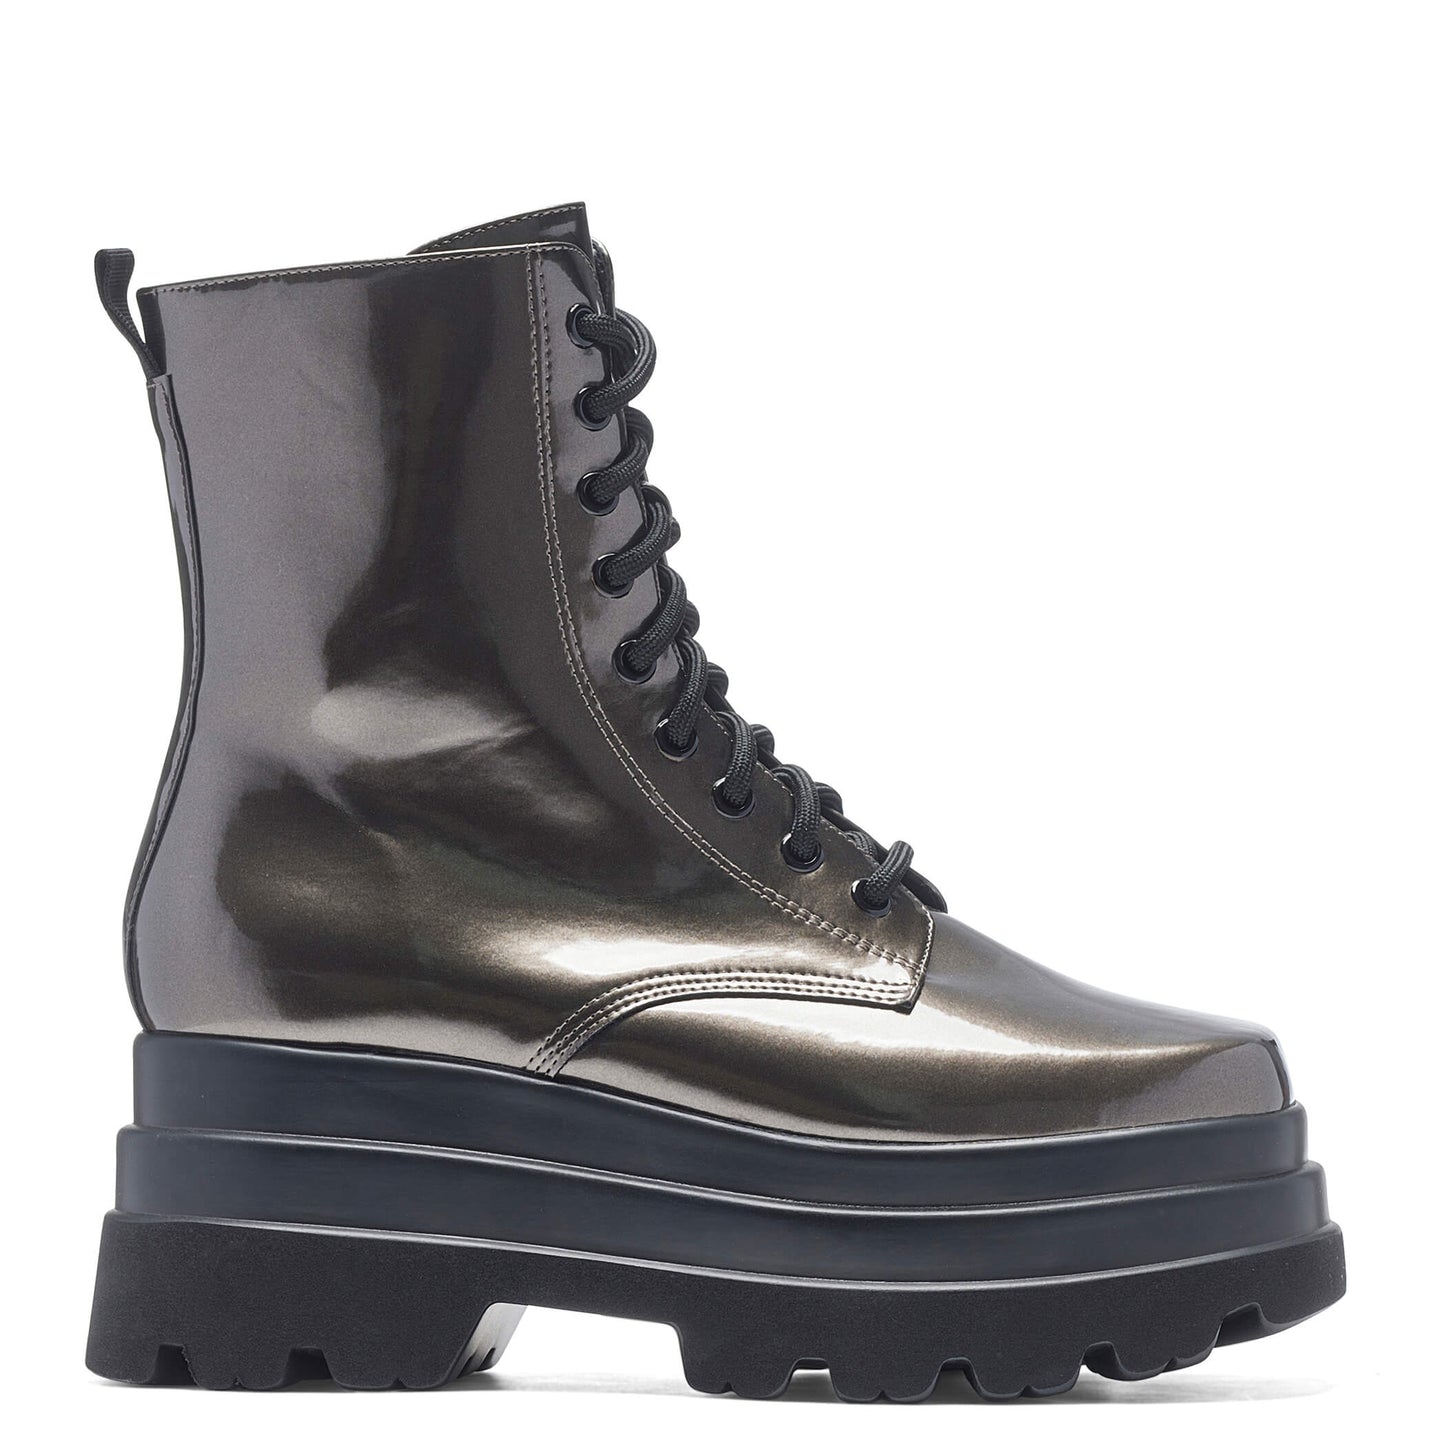 Deathwatch Trident Platform Boots - Static Grey - KOI Footwear - Side View